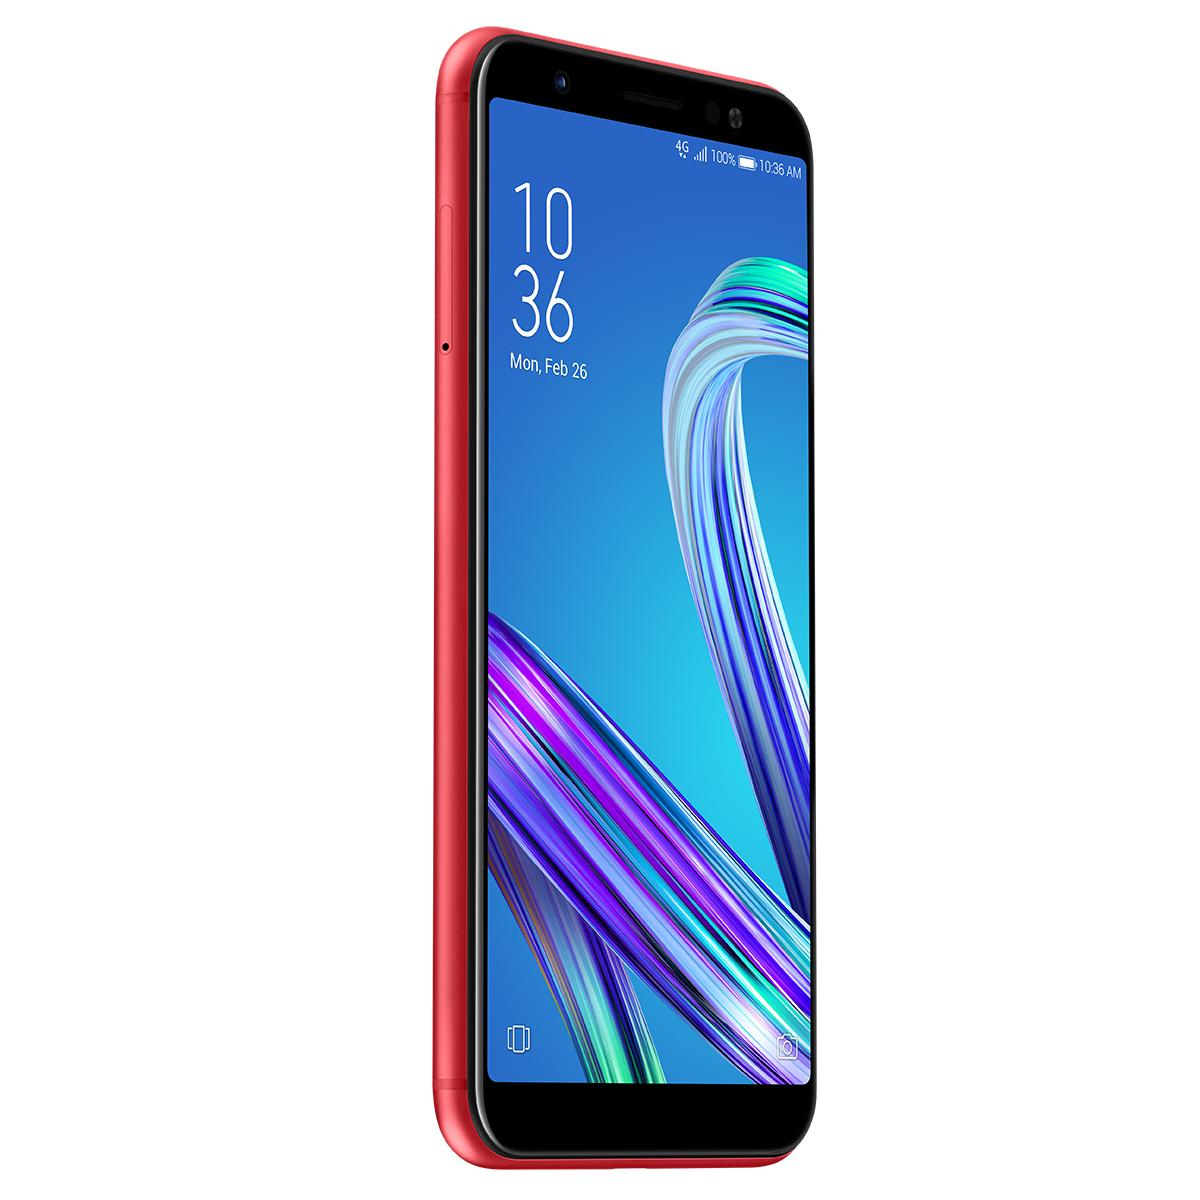 Asus ZenFone Max ZB555KL-4C146EU Red smartphone